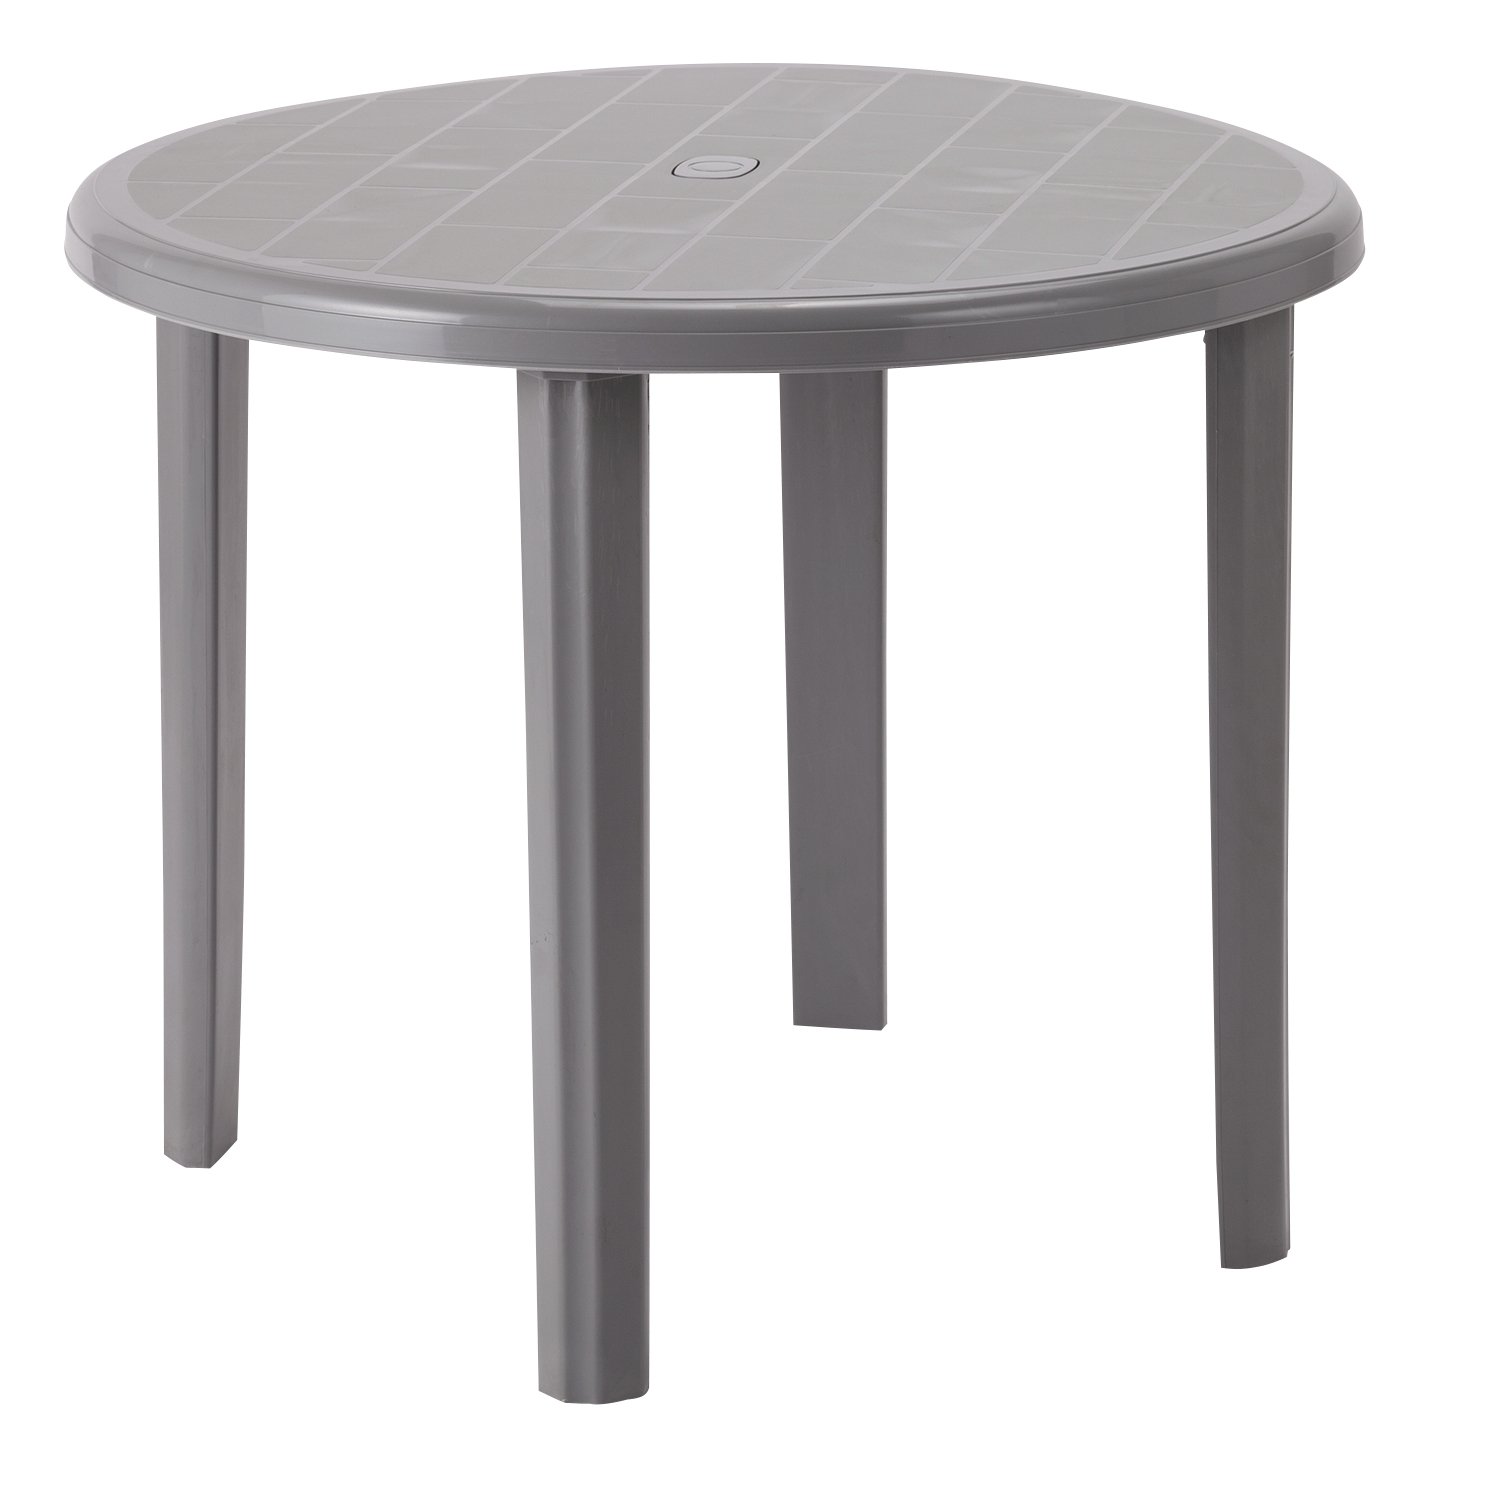 Argos Home Round 4 Seater Garden Table - Light Grey